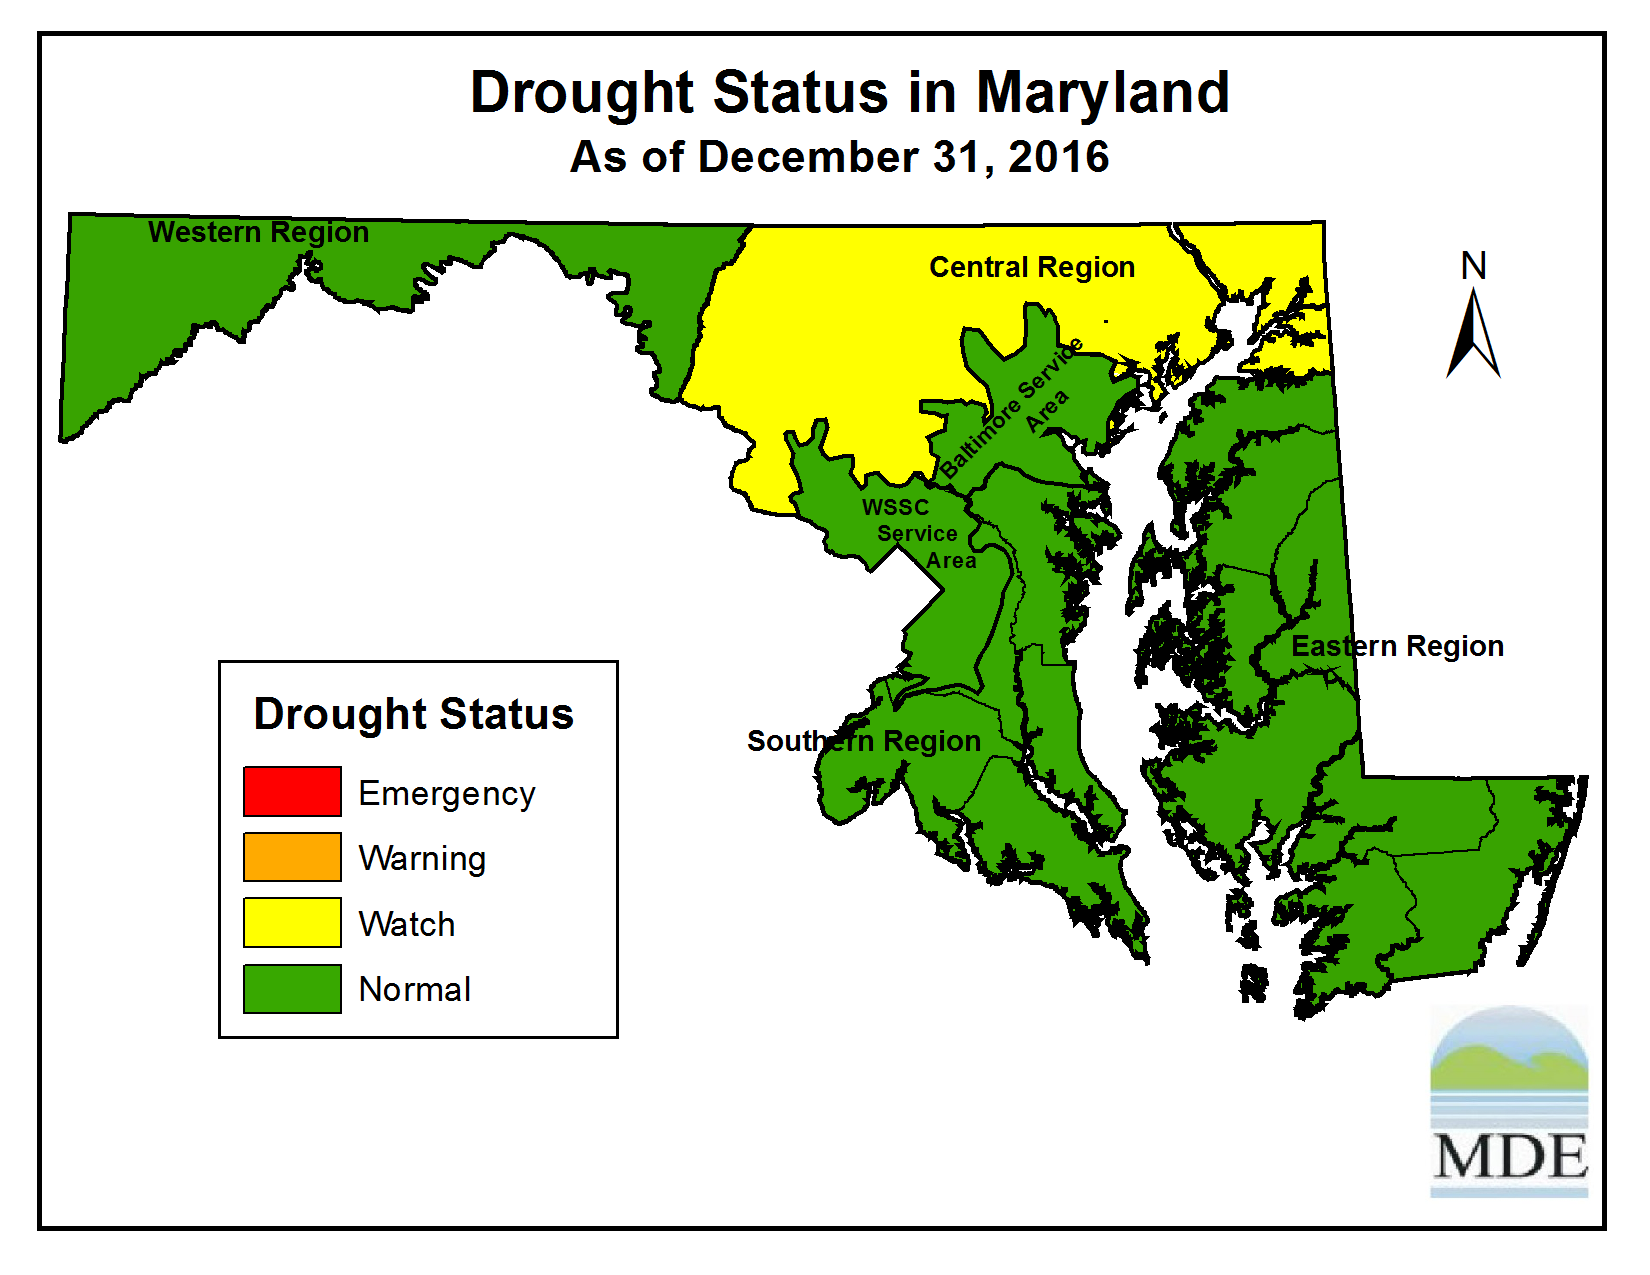 Drought Status as of December 31, 2016